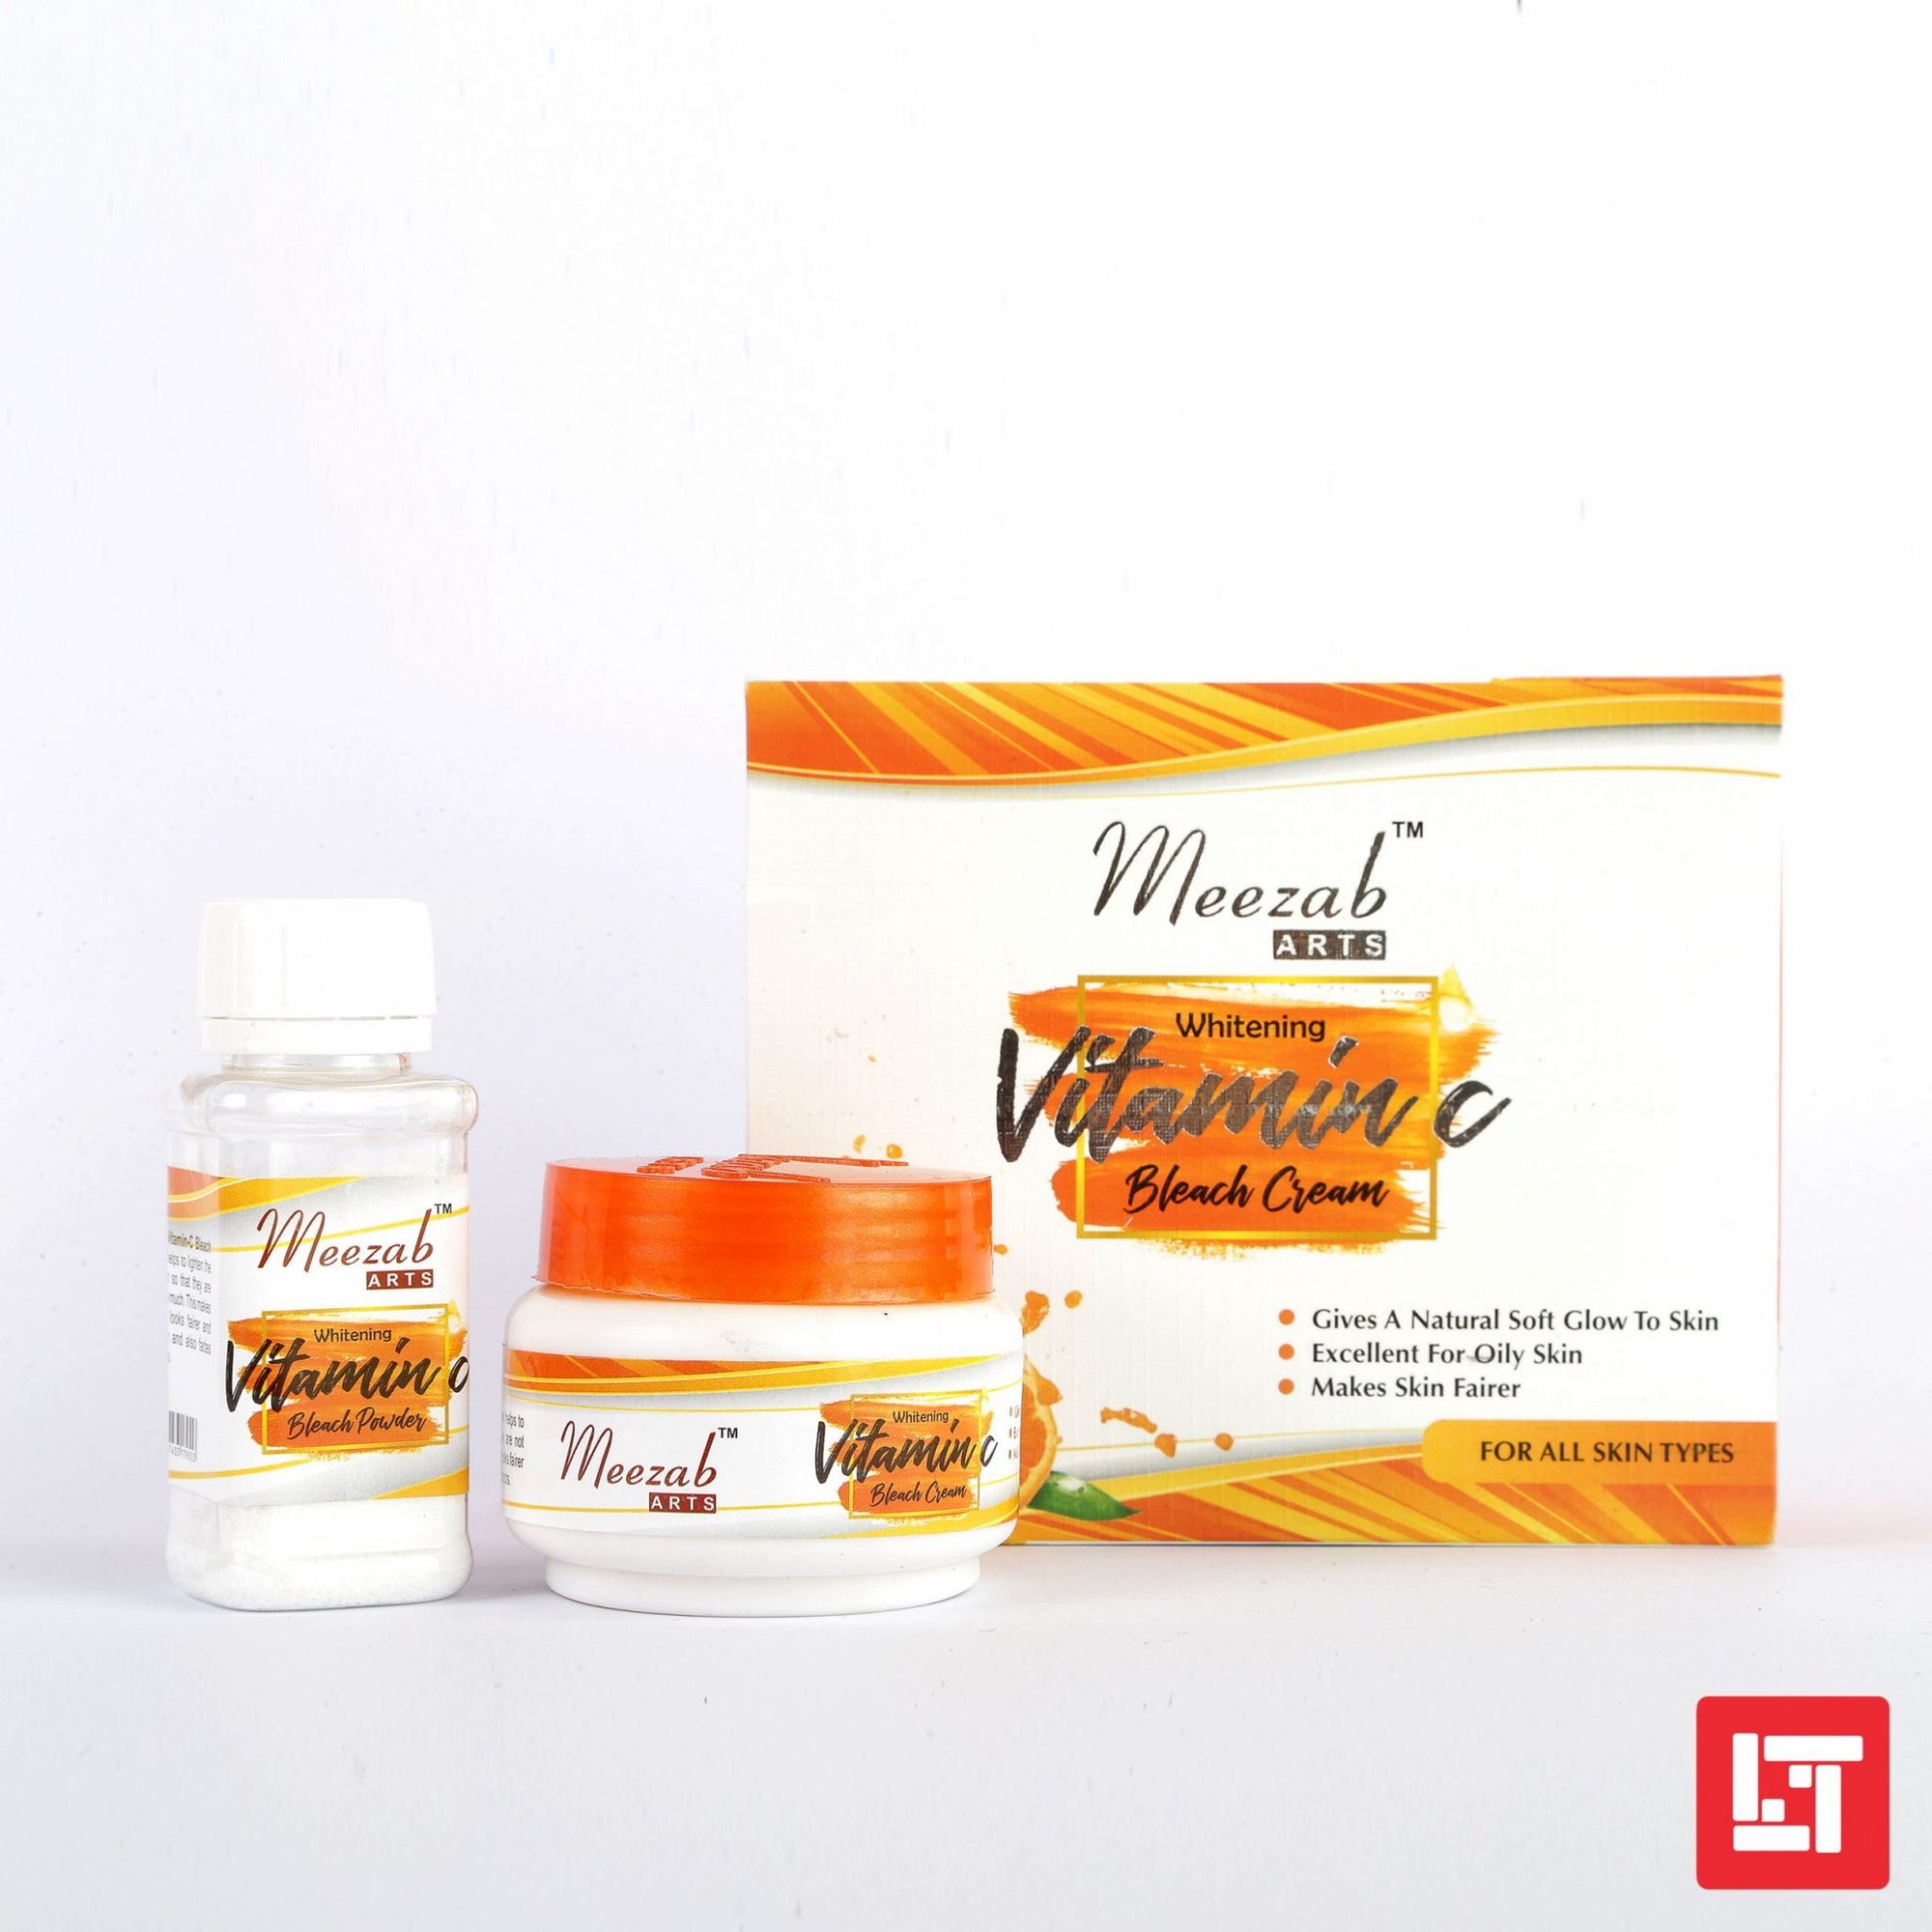 Meezab Arts Whitening Vitamin C Bleach Cream for All Skin Types freeshipping - lasertag.pk